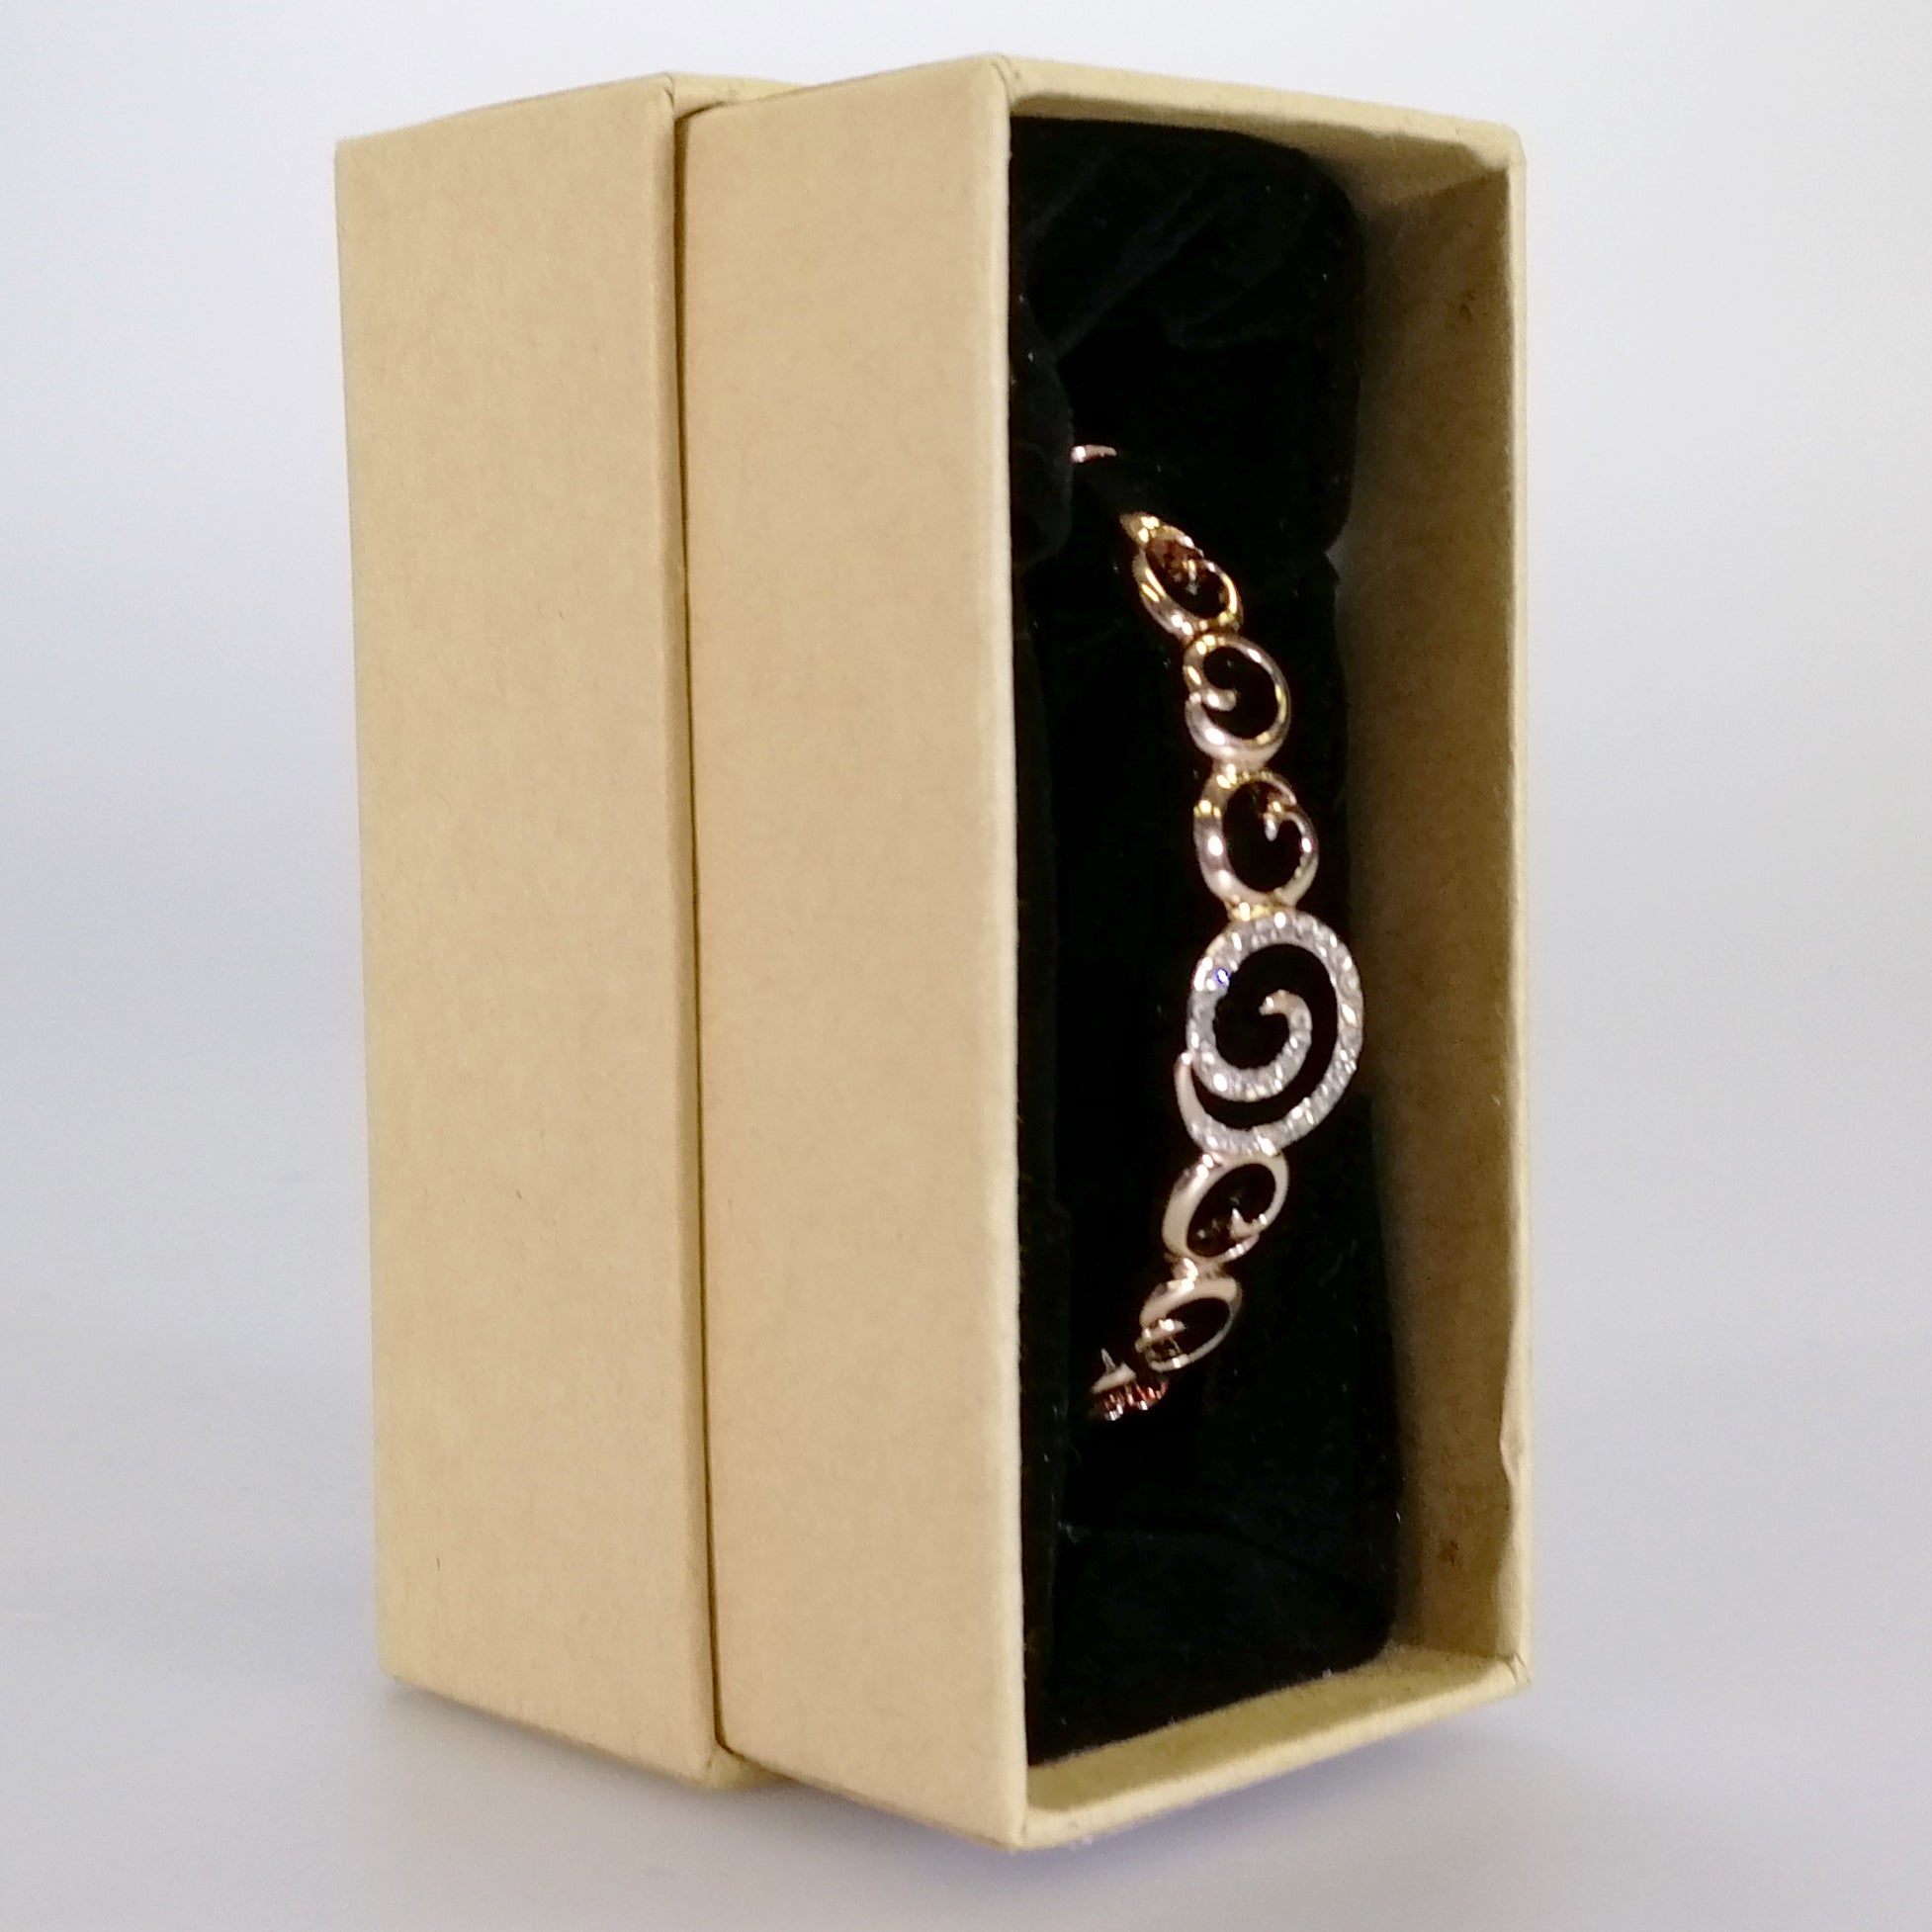 Kiwicraft - Rose Gold Koru Bracelet